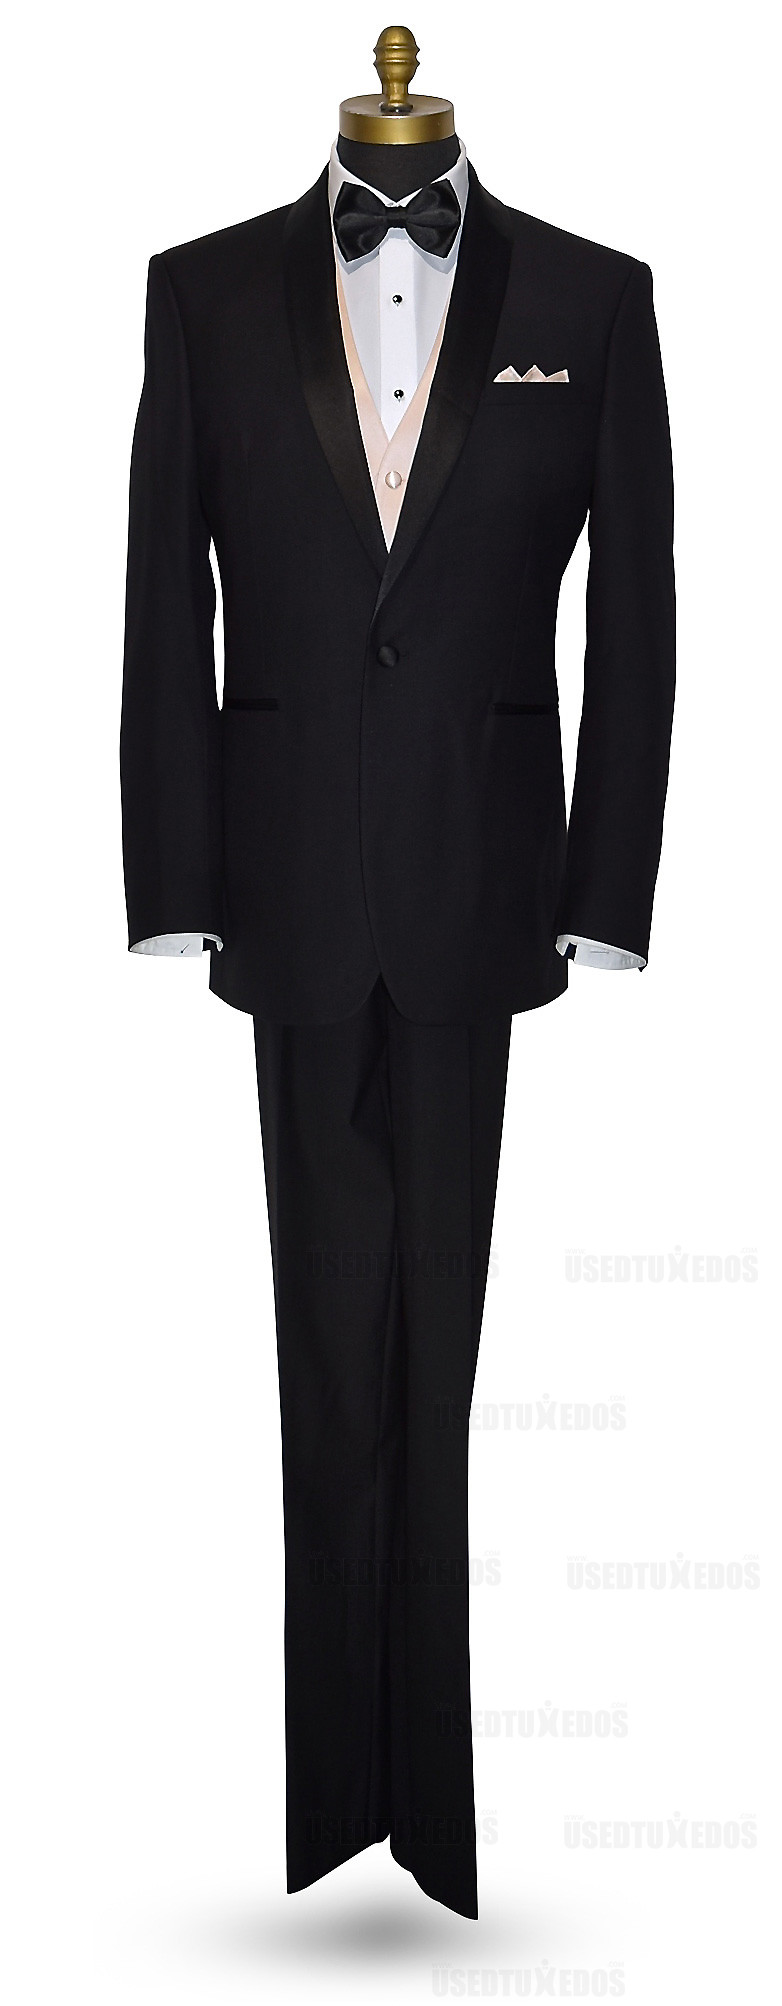 men's nude color vest with black bowtie and black tuxedo